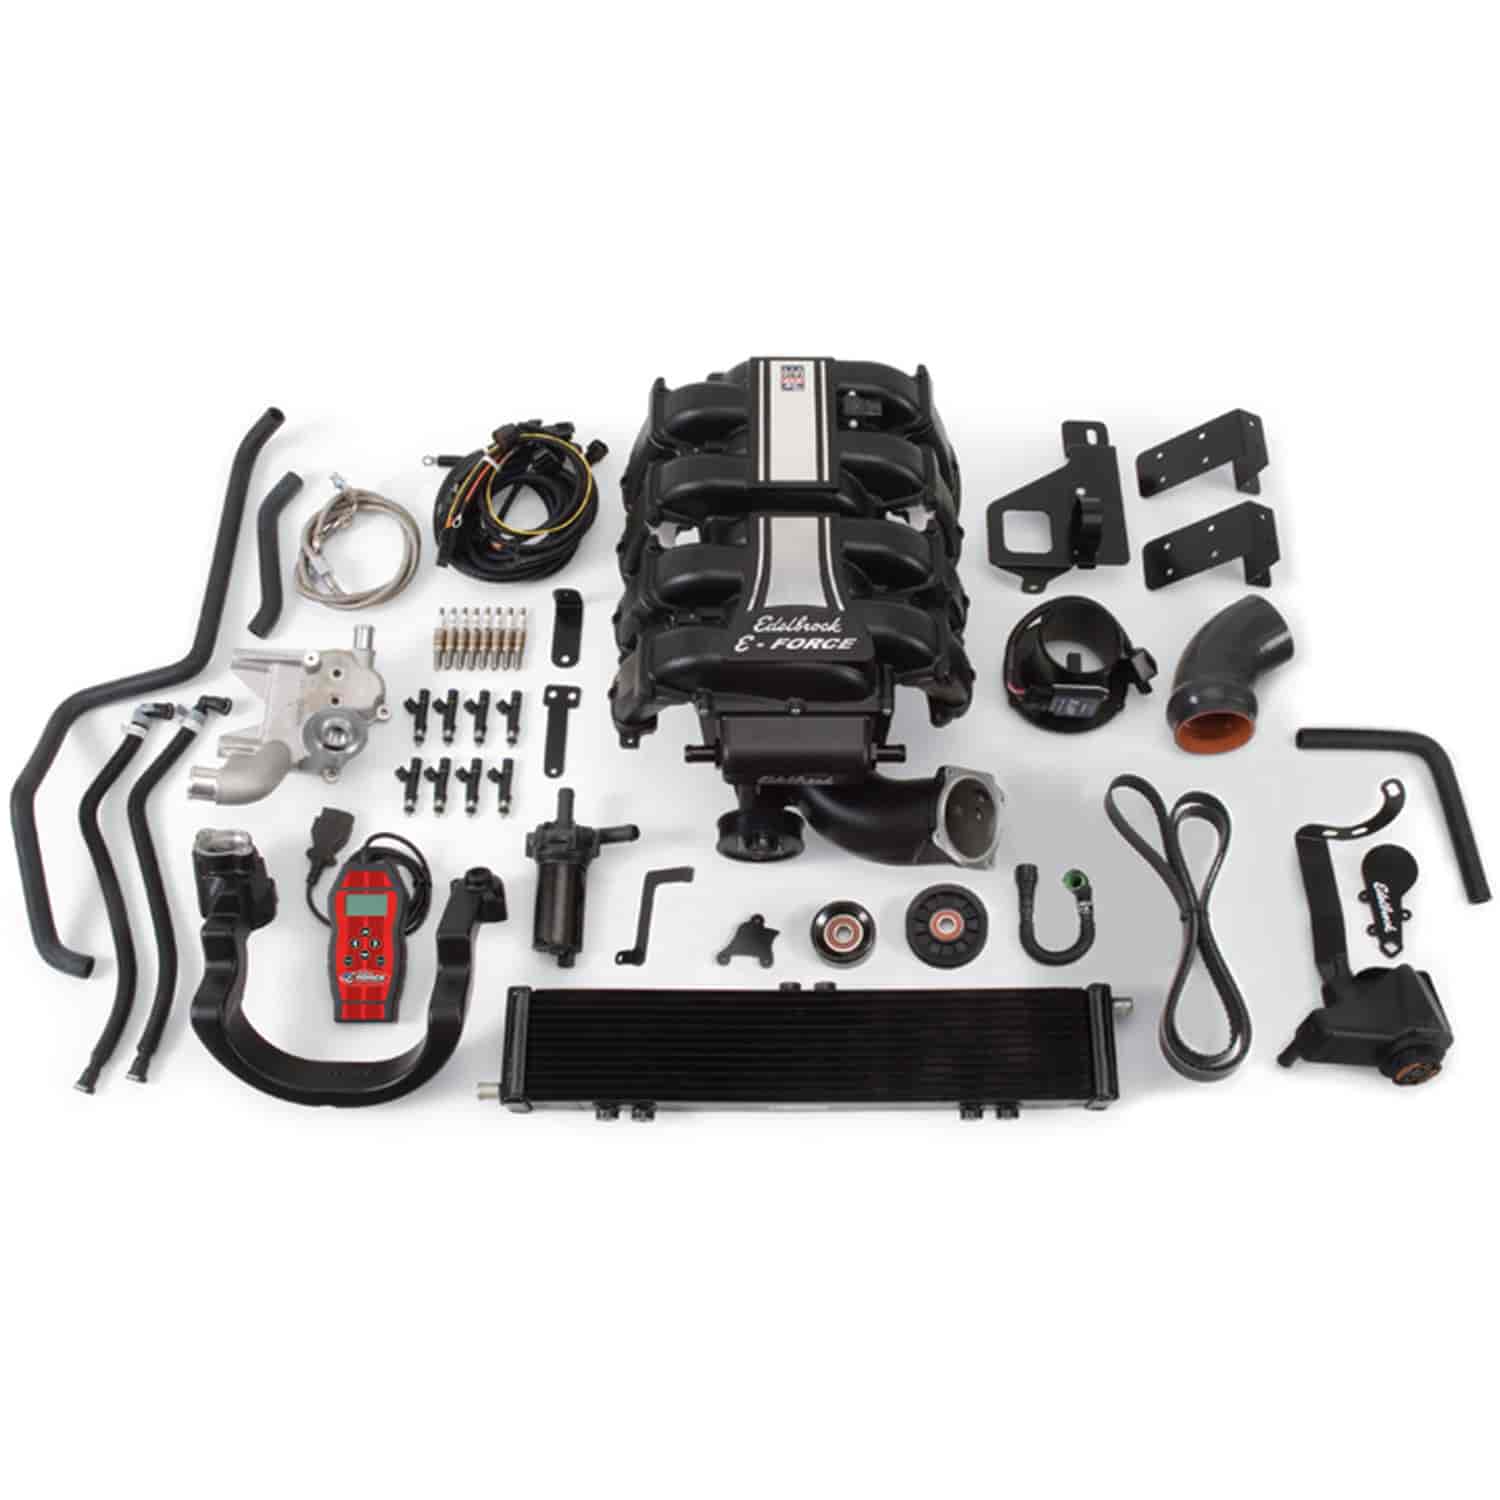 E-Force Supercharger Kit for 2009-2010 Ford F-150 2WD 5.4L 3V